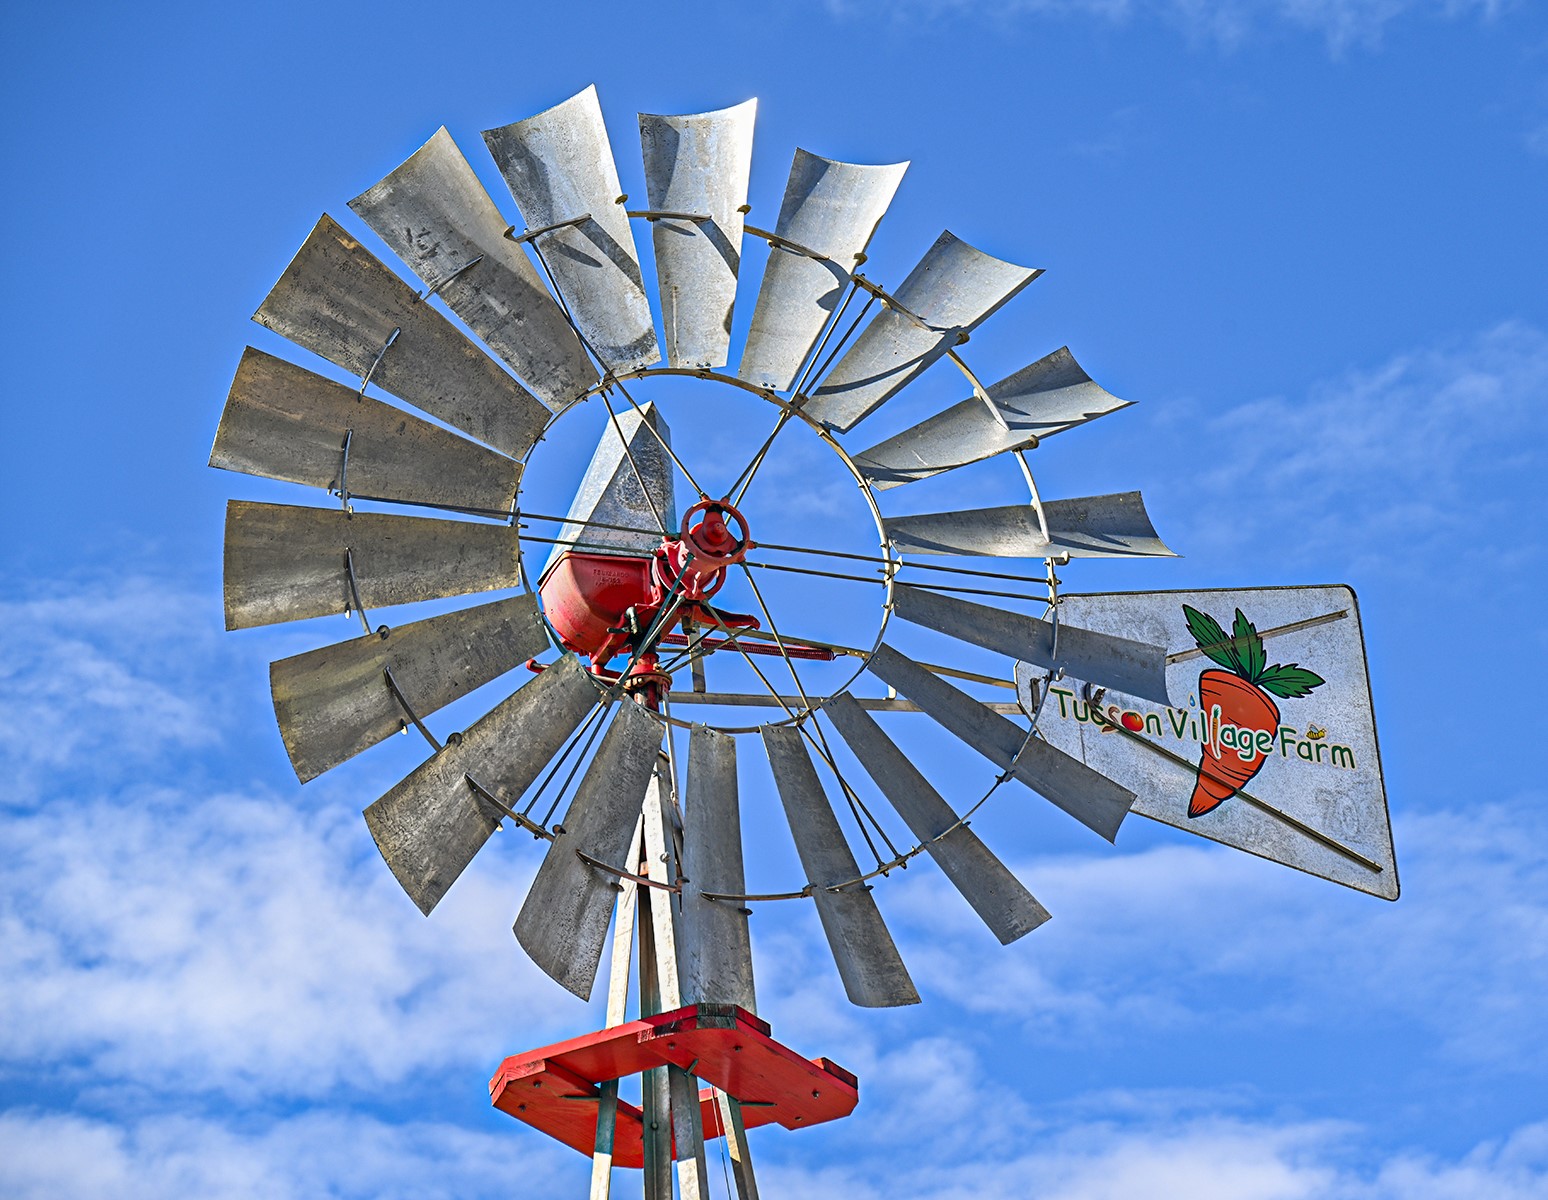 A closeup of a windmill at Ƶapp Village Farm.